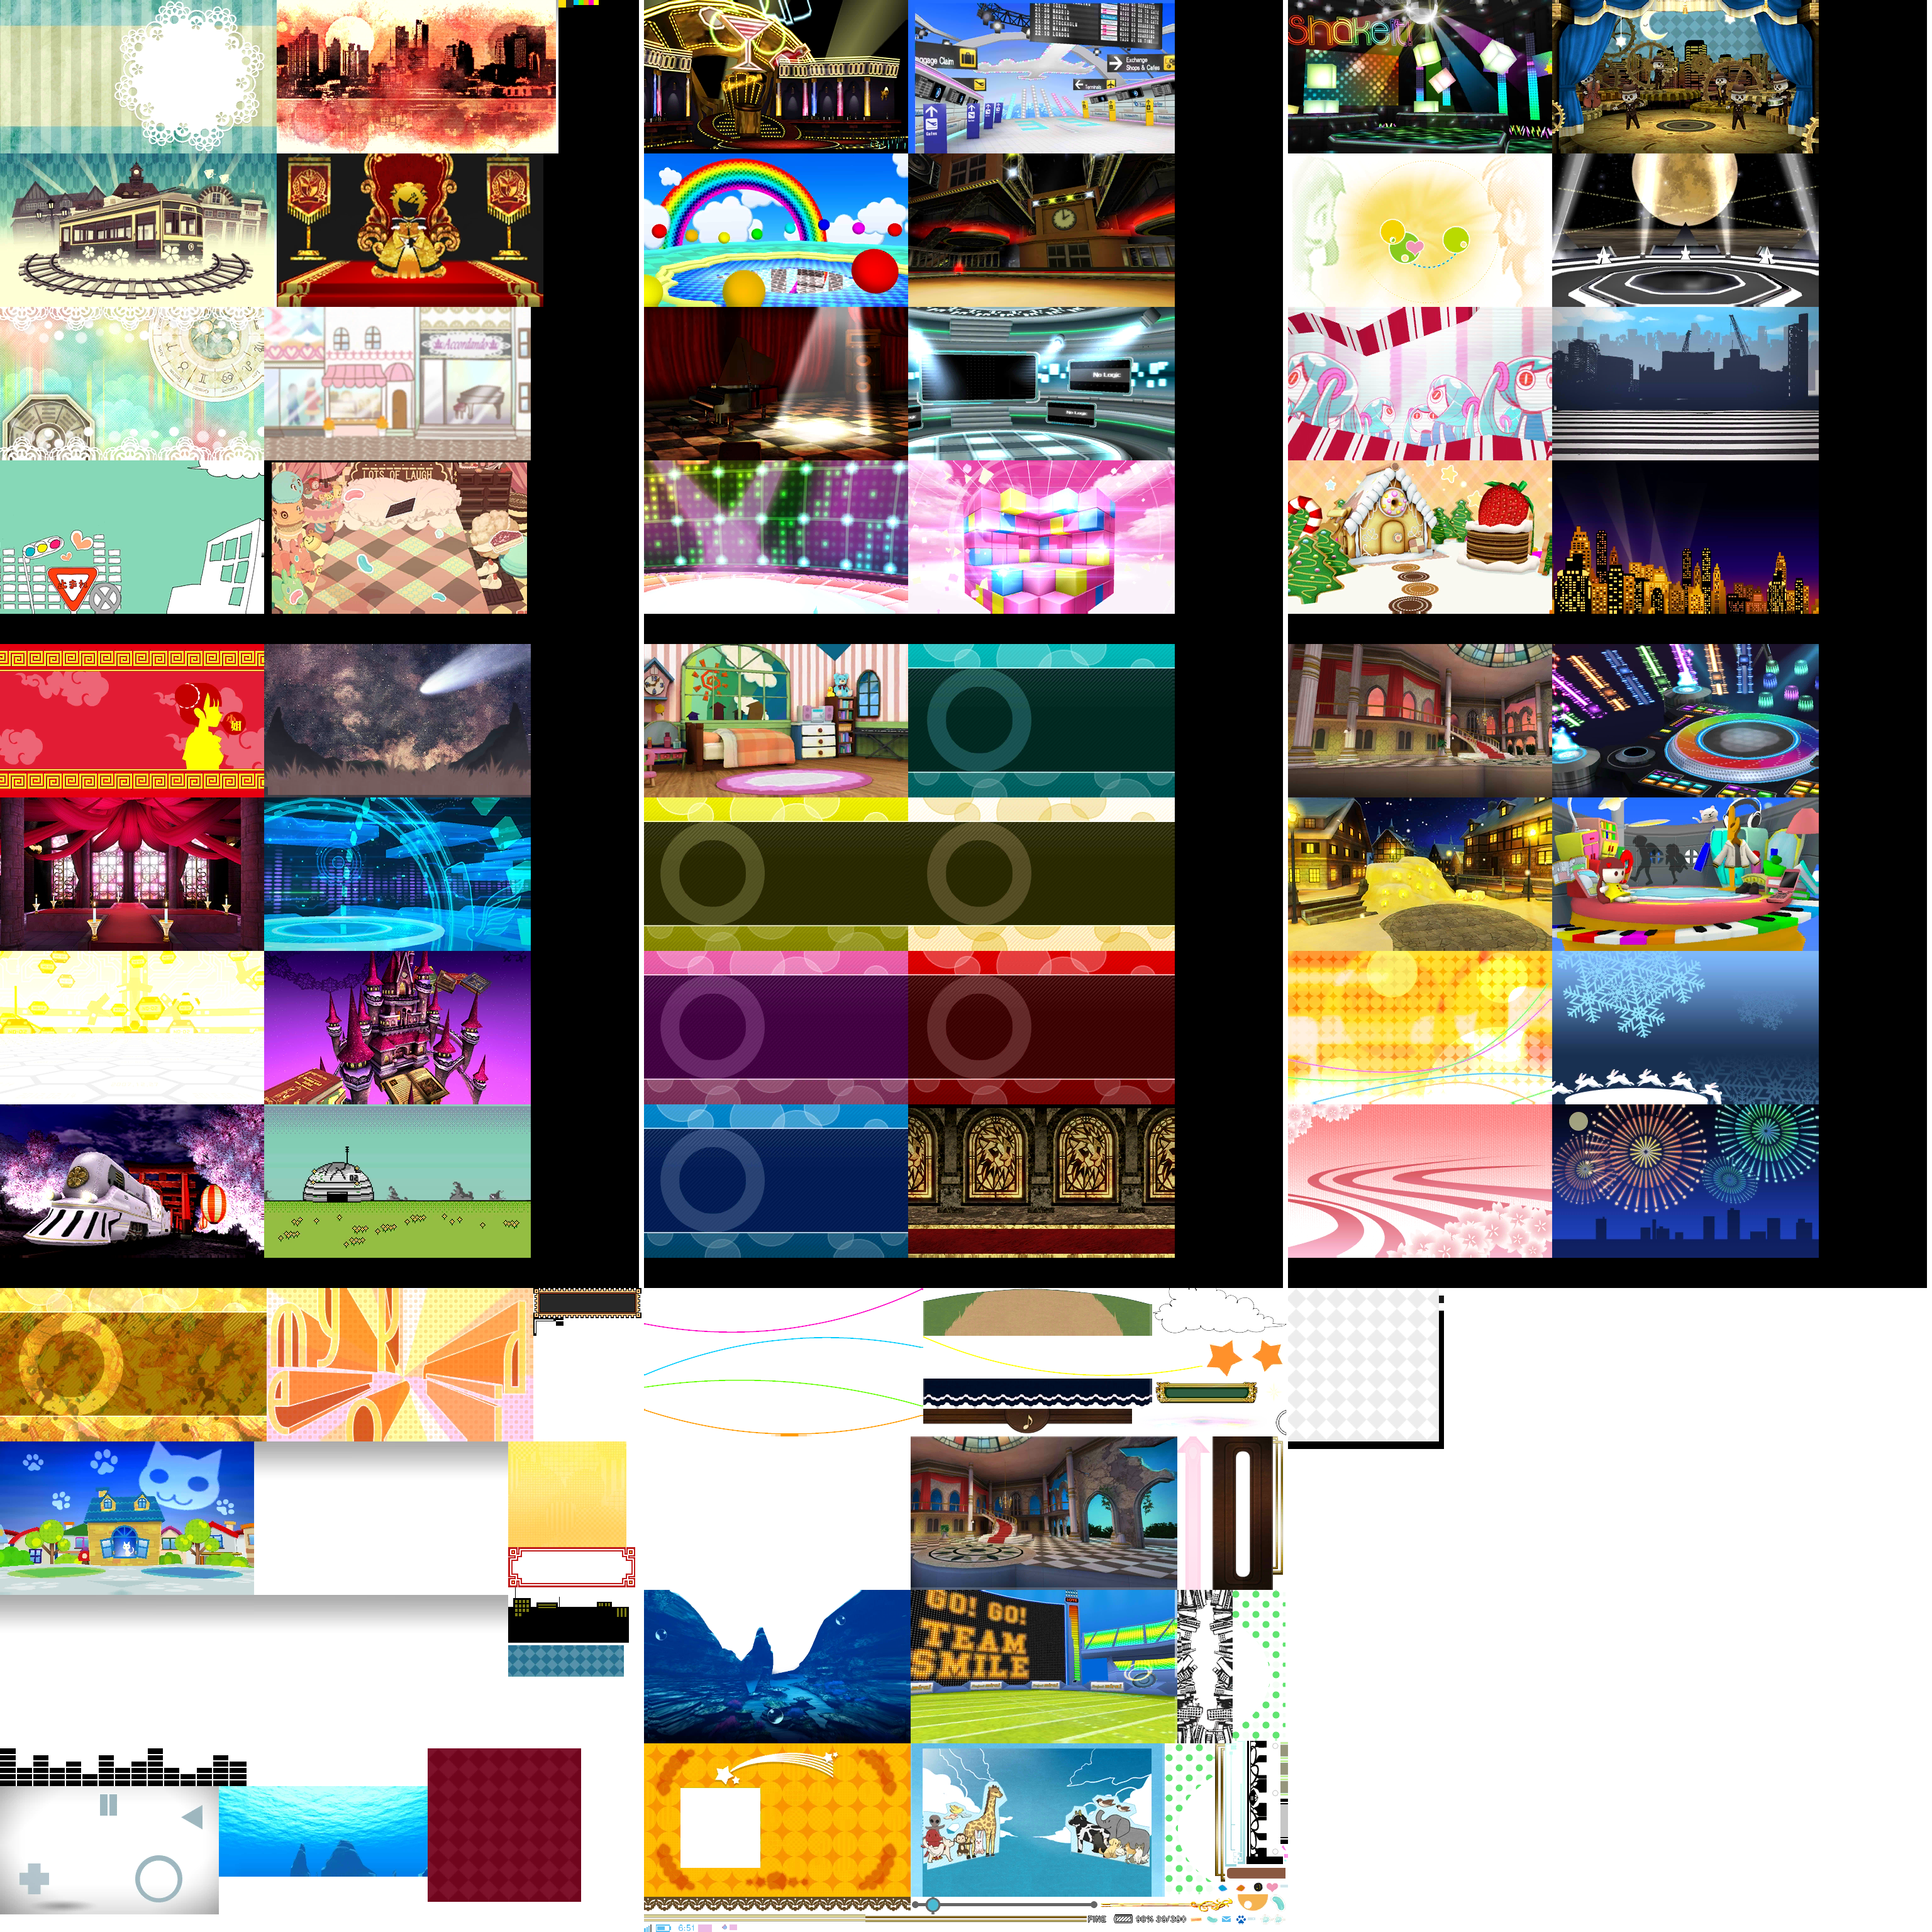 Hatsune Miku: Project Mirai 2 (JPN) - Profile Backgrounds